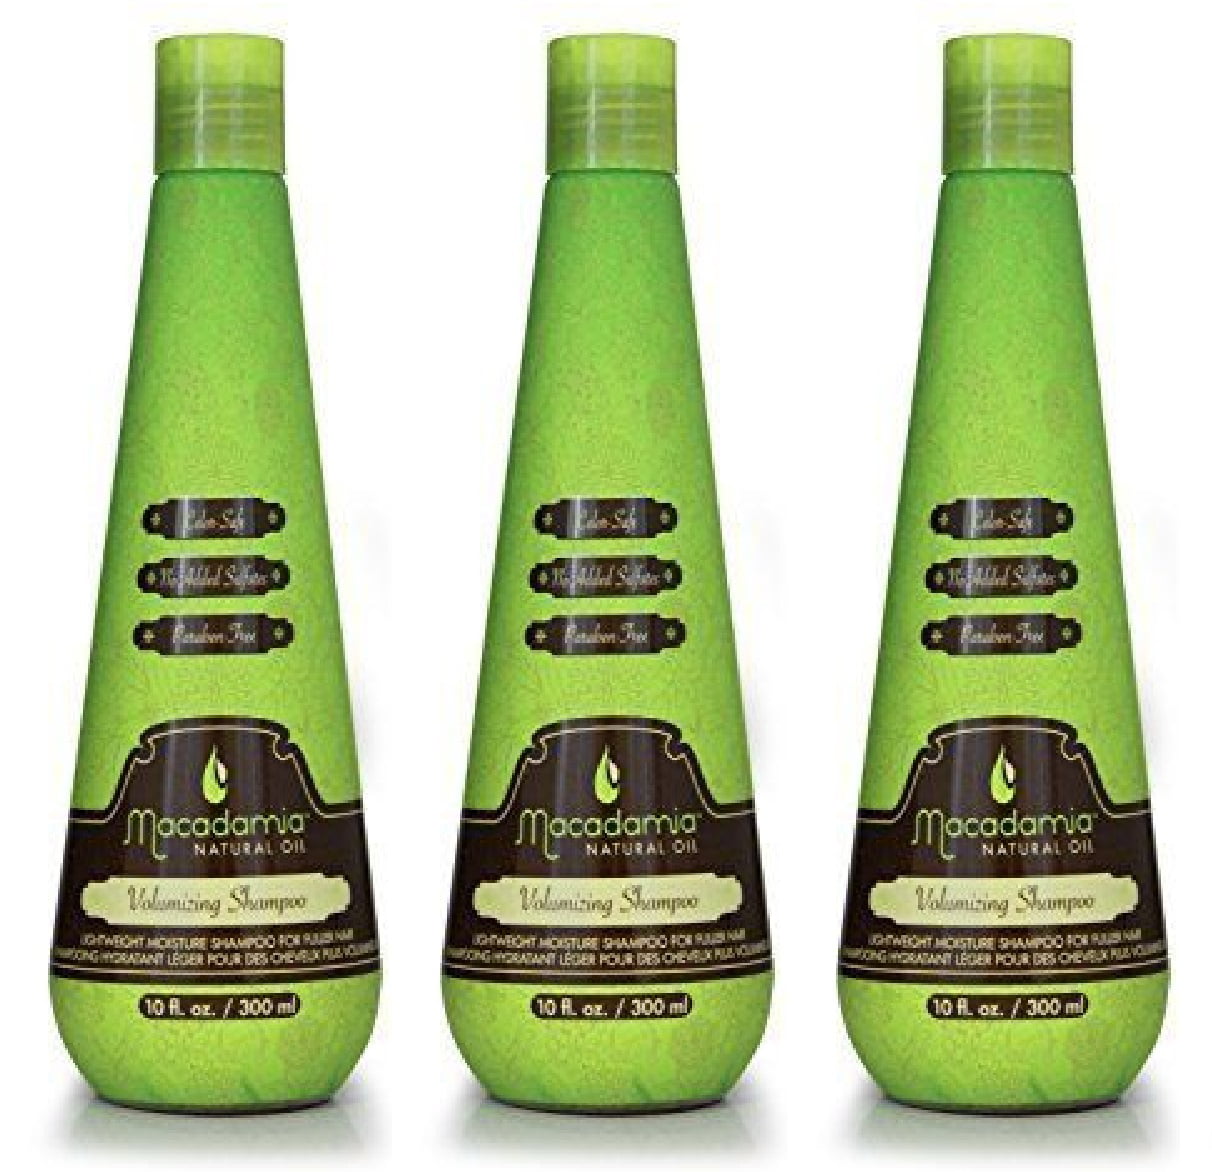 Macadamia Natural Oil, Volumizing Shampoo, Lightweight Moisture Shampoo for Oz (Pack of 3) - Walmart.com